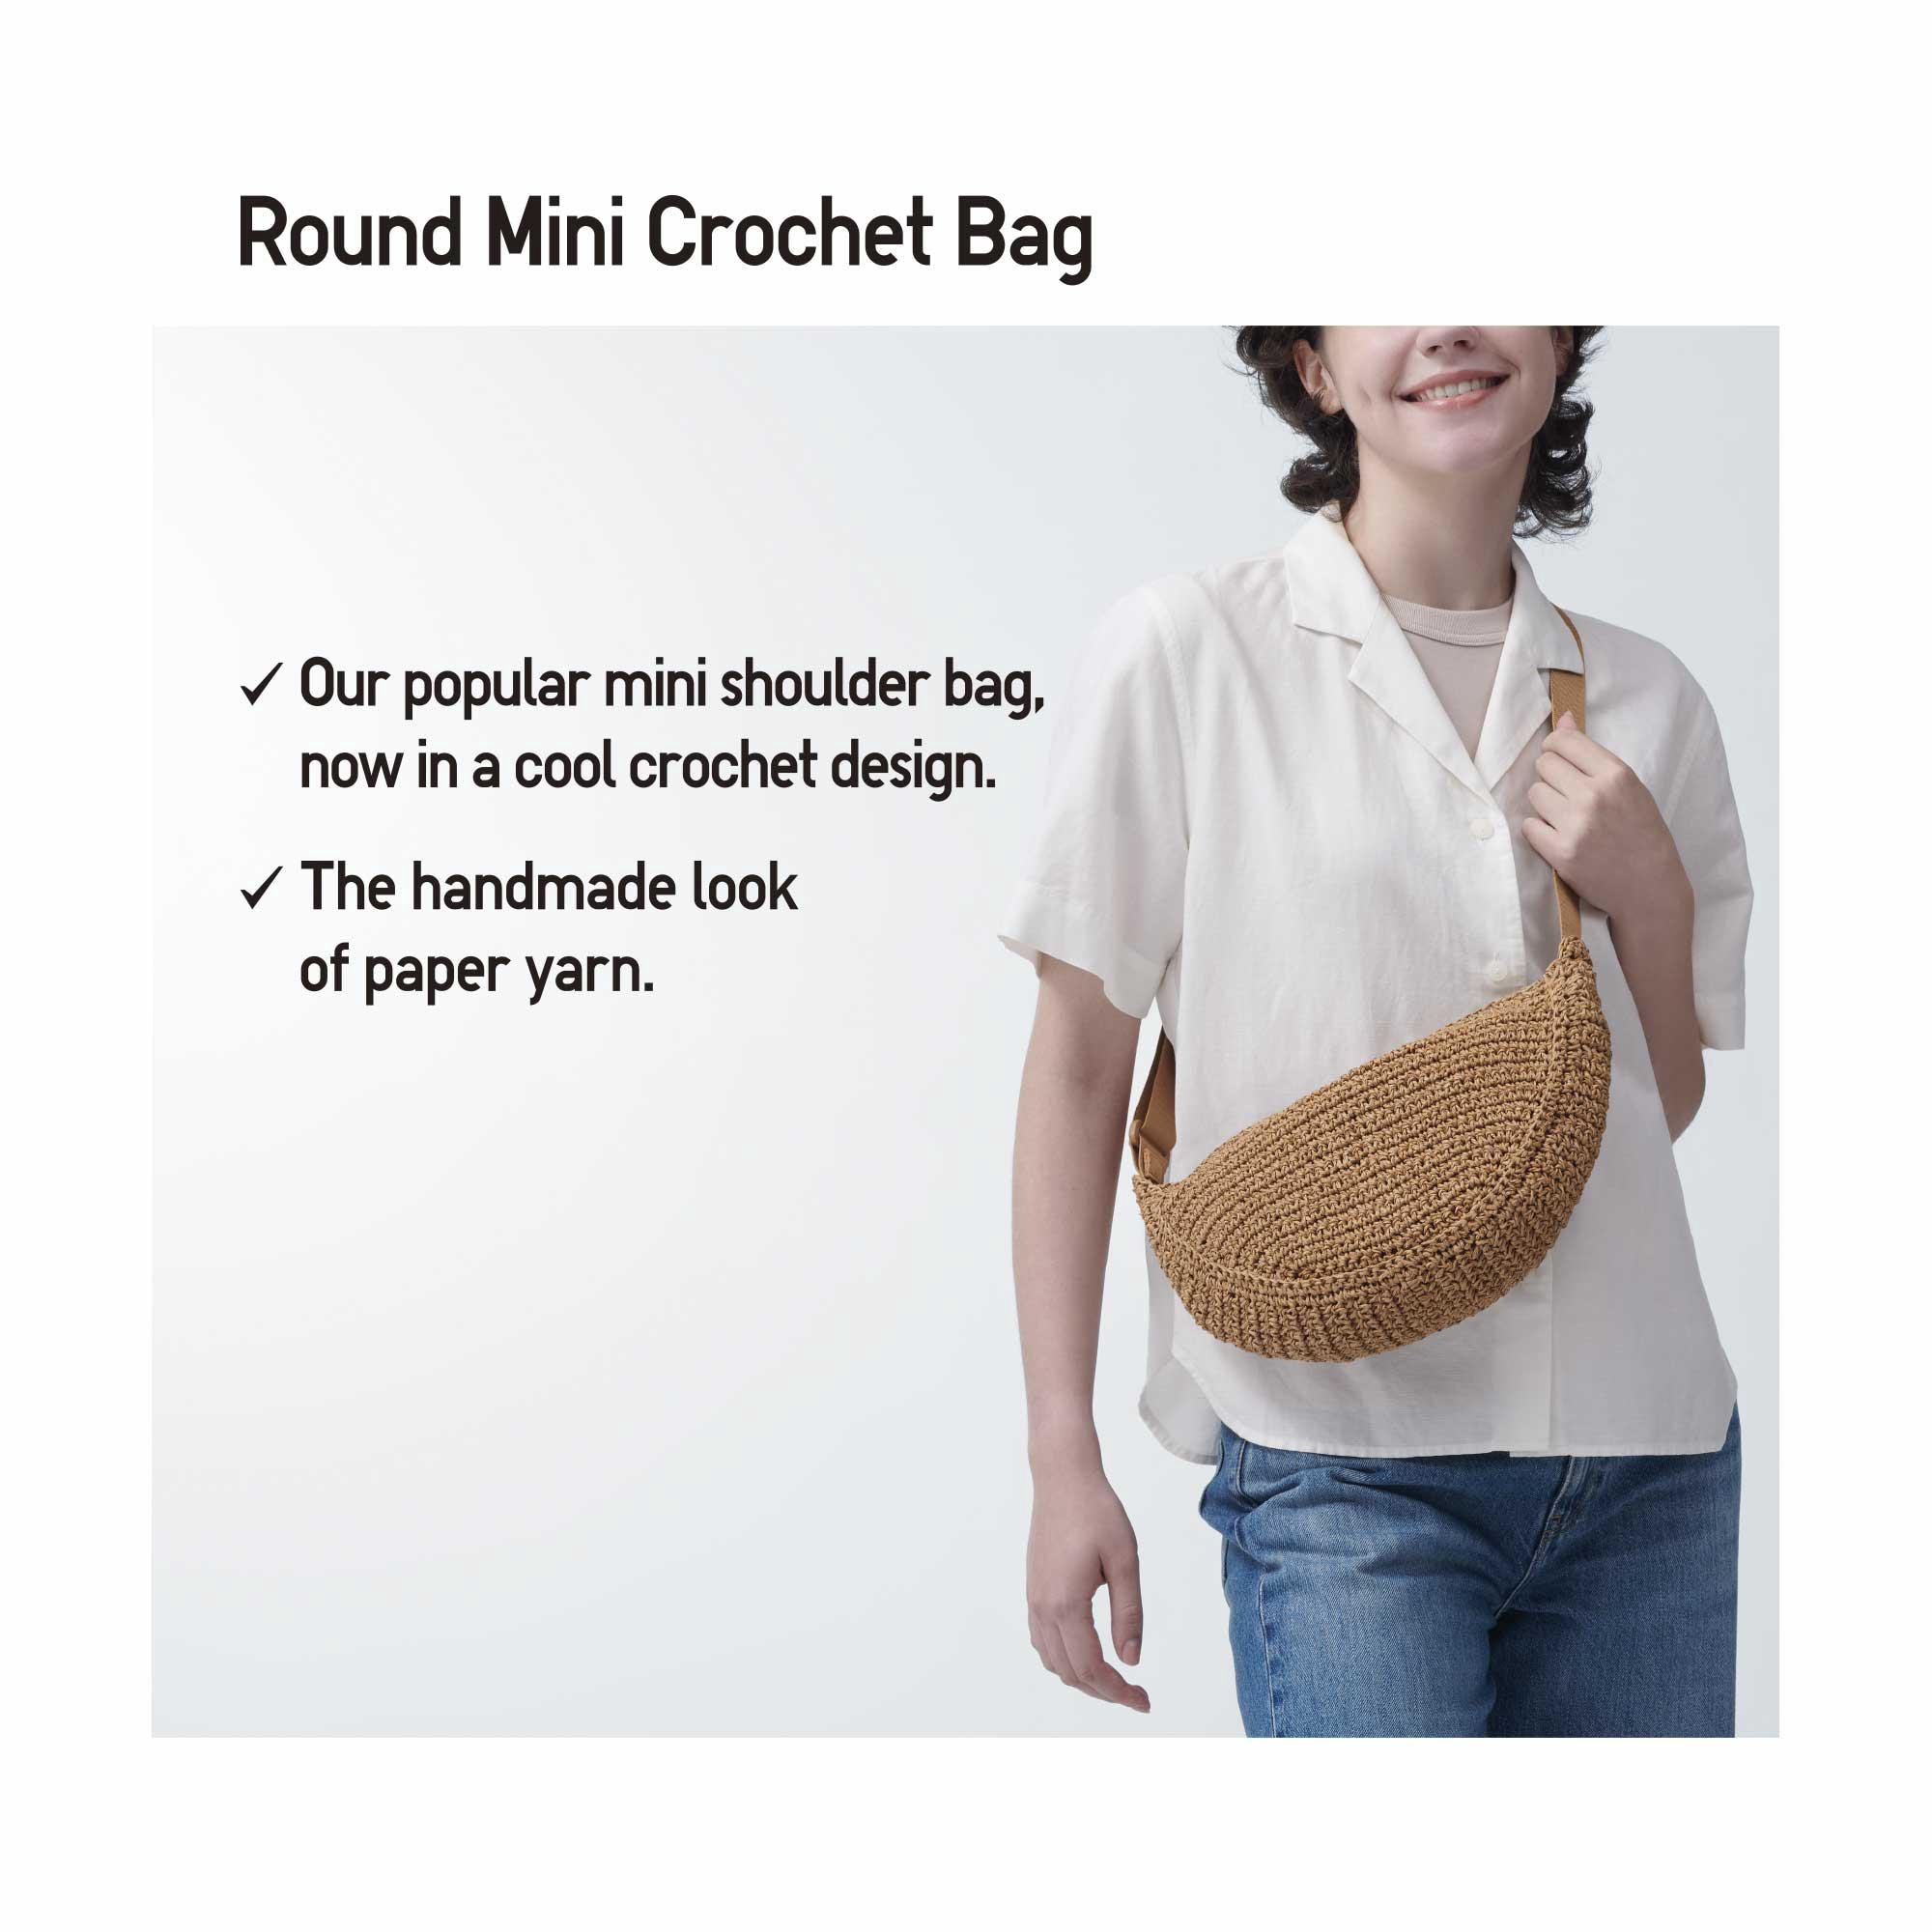 ROUND MINI CROCHET BAG